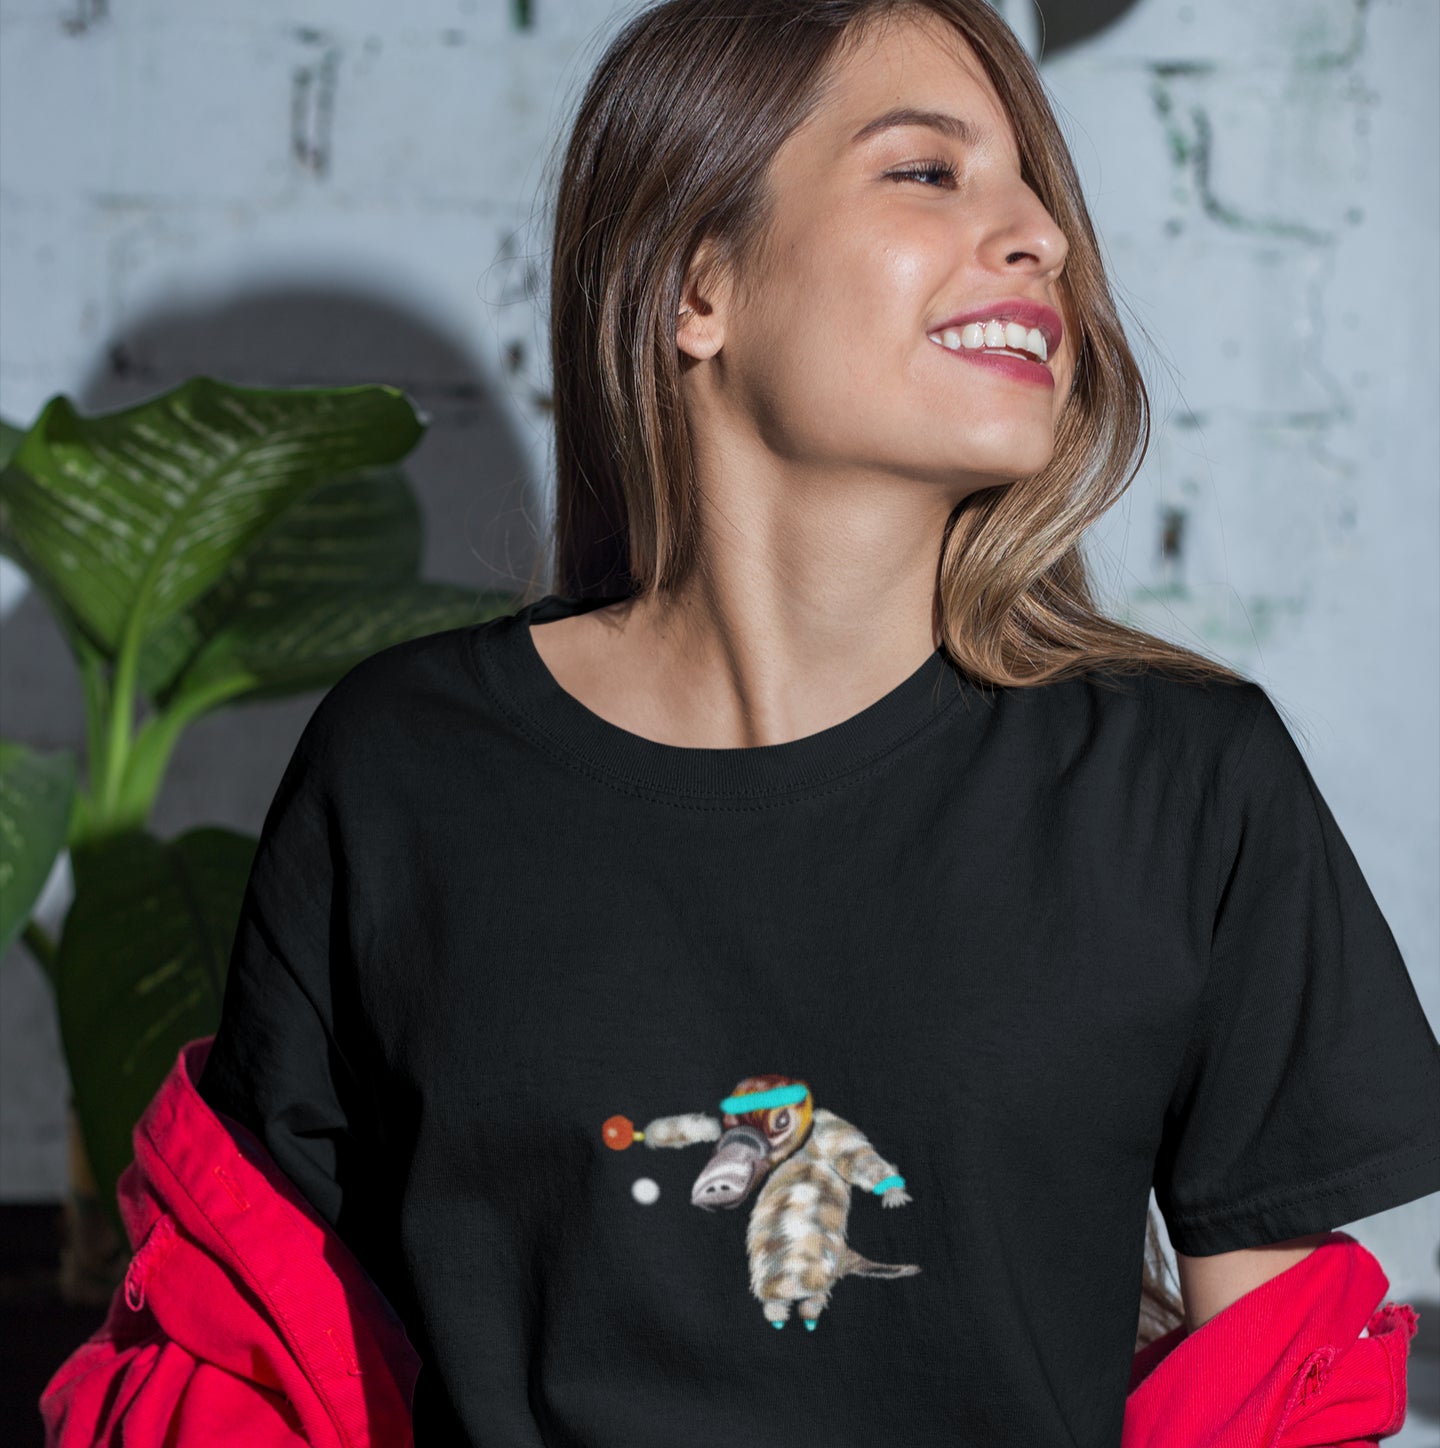 Ping Pong Platypus | 100% Organic Cotton T Shirt worn by a woman